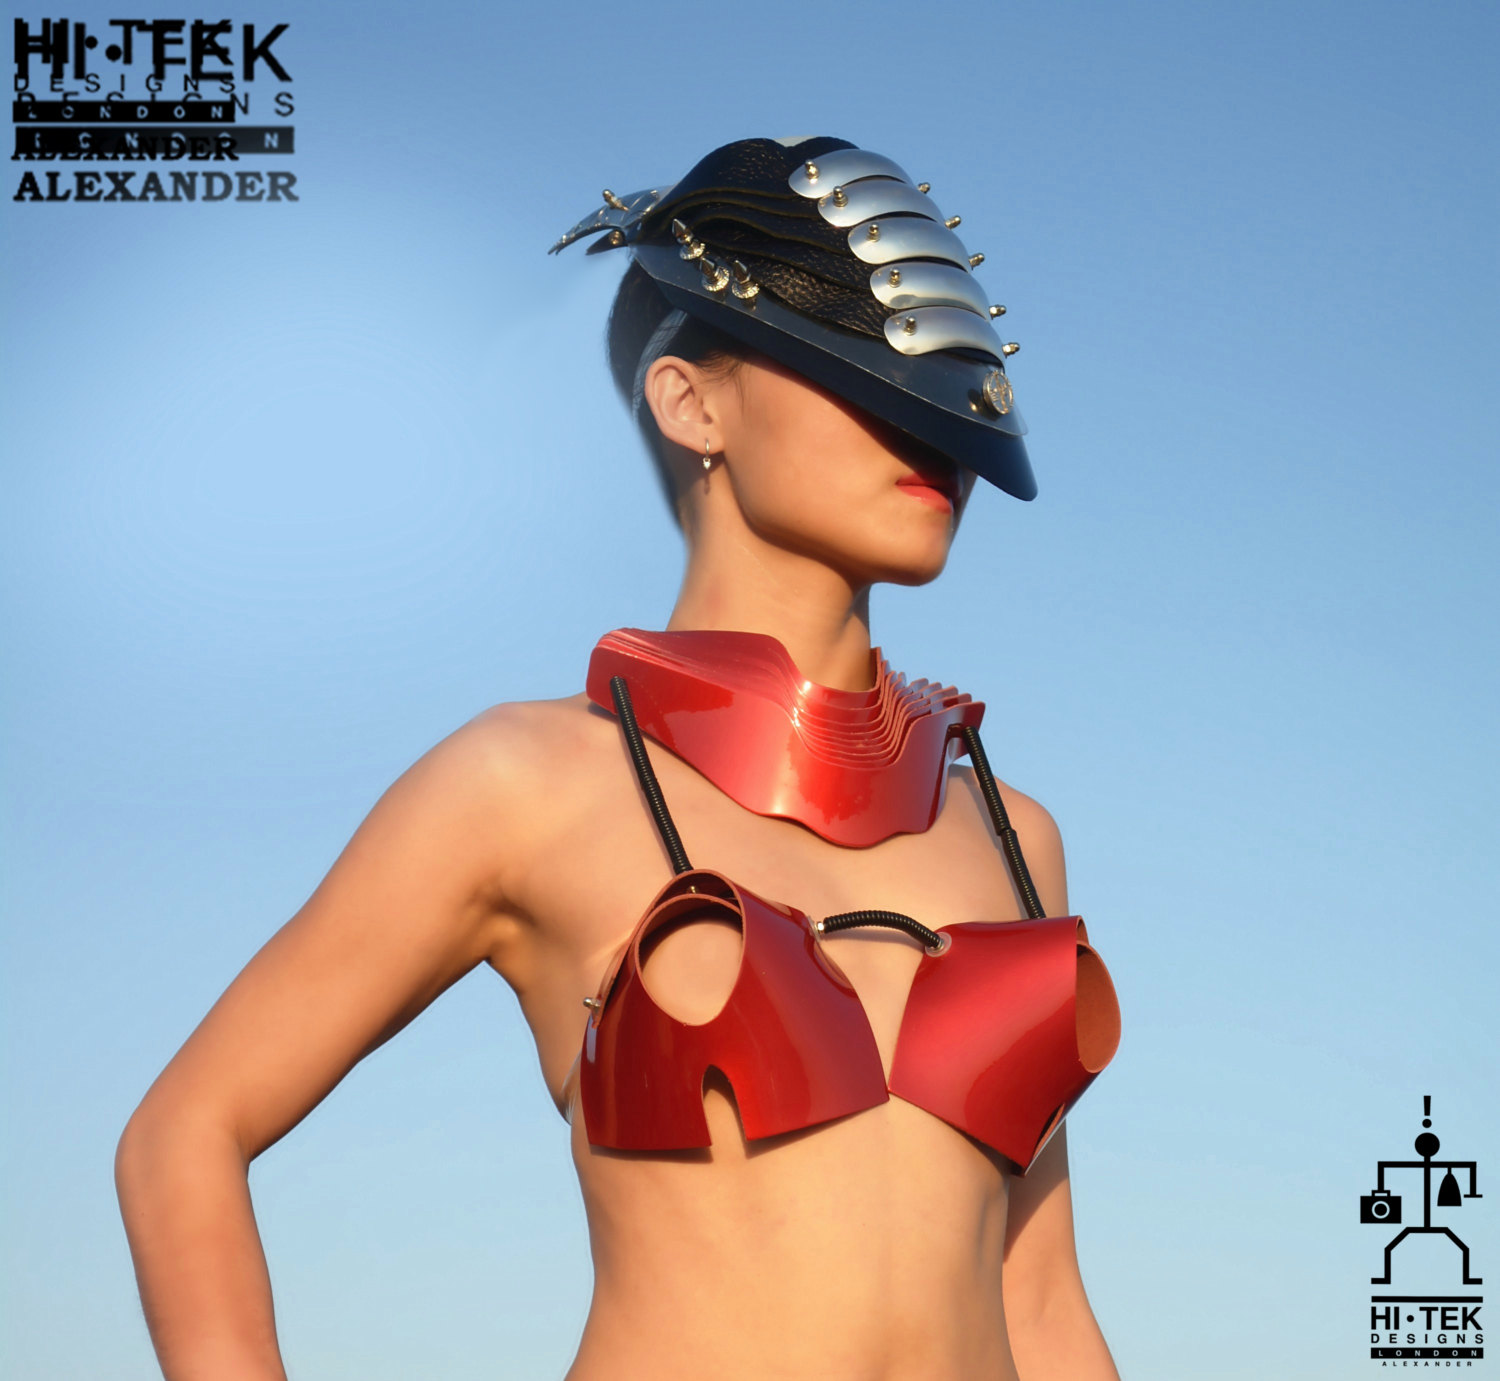 Hi Tek women's dancewear cosplay lady gaga style unique steampunk gothic red  leather bra sci fi costume cyberpunk fetish futuristic clothing - Hi Tek  Webstore